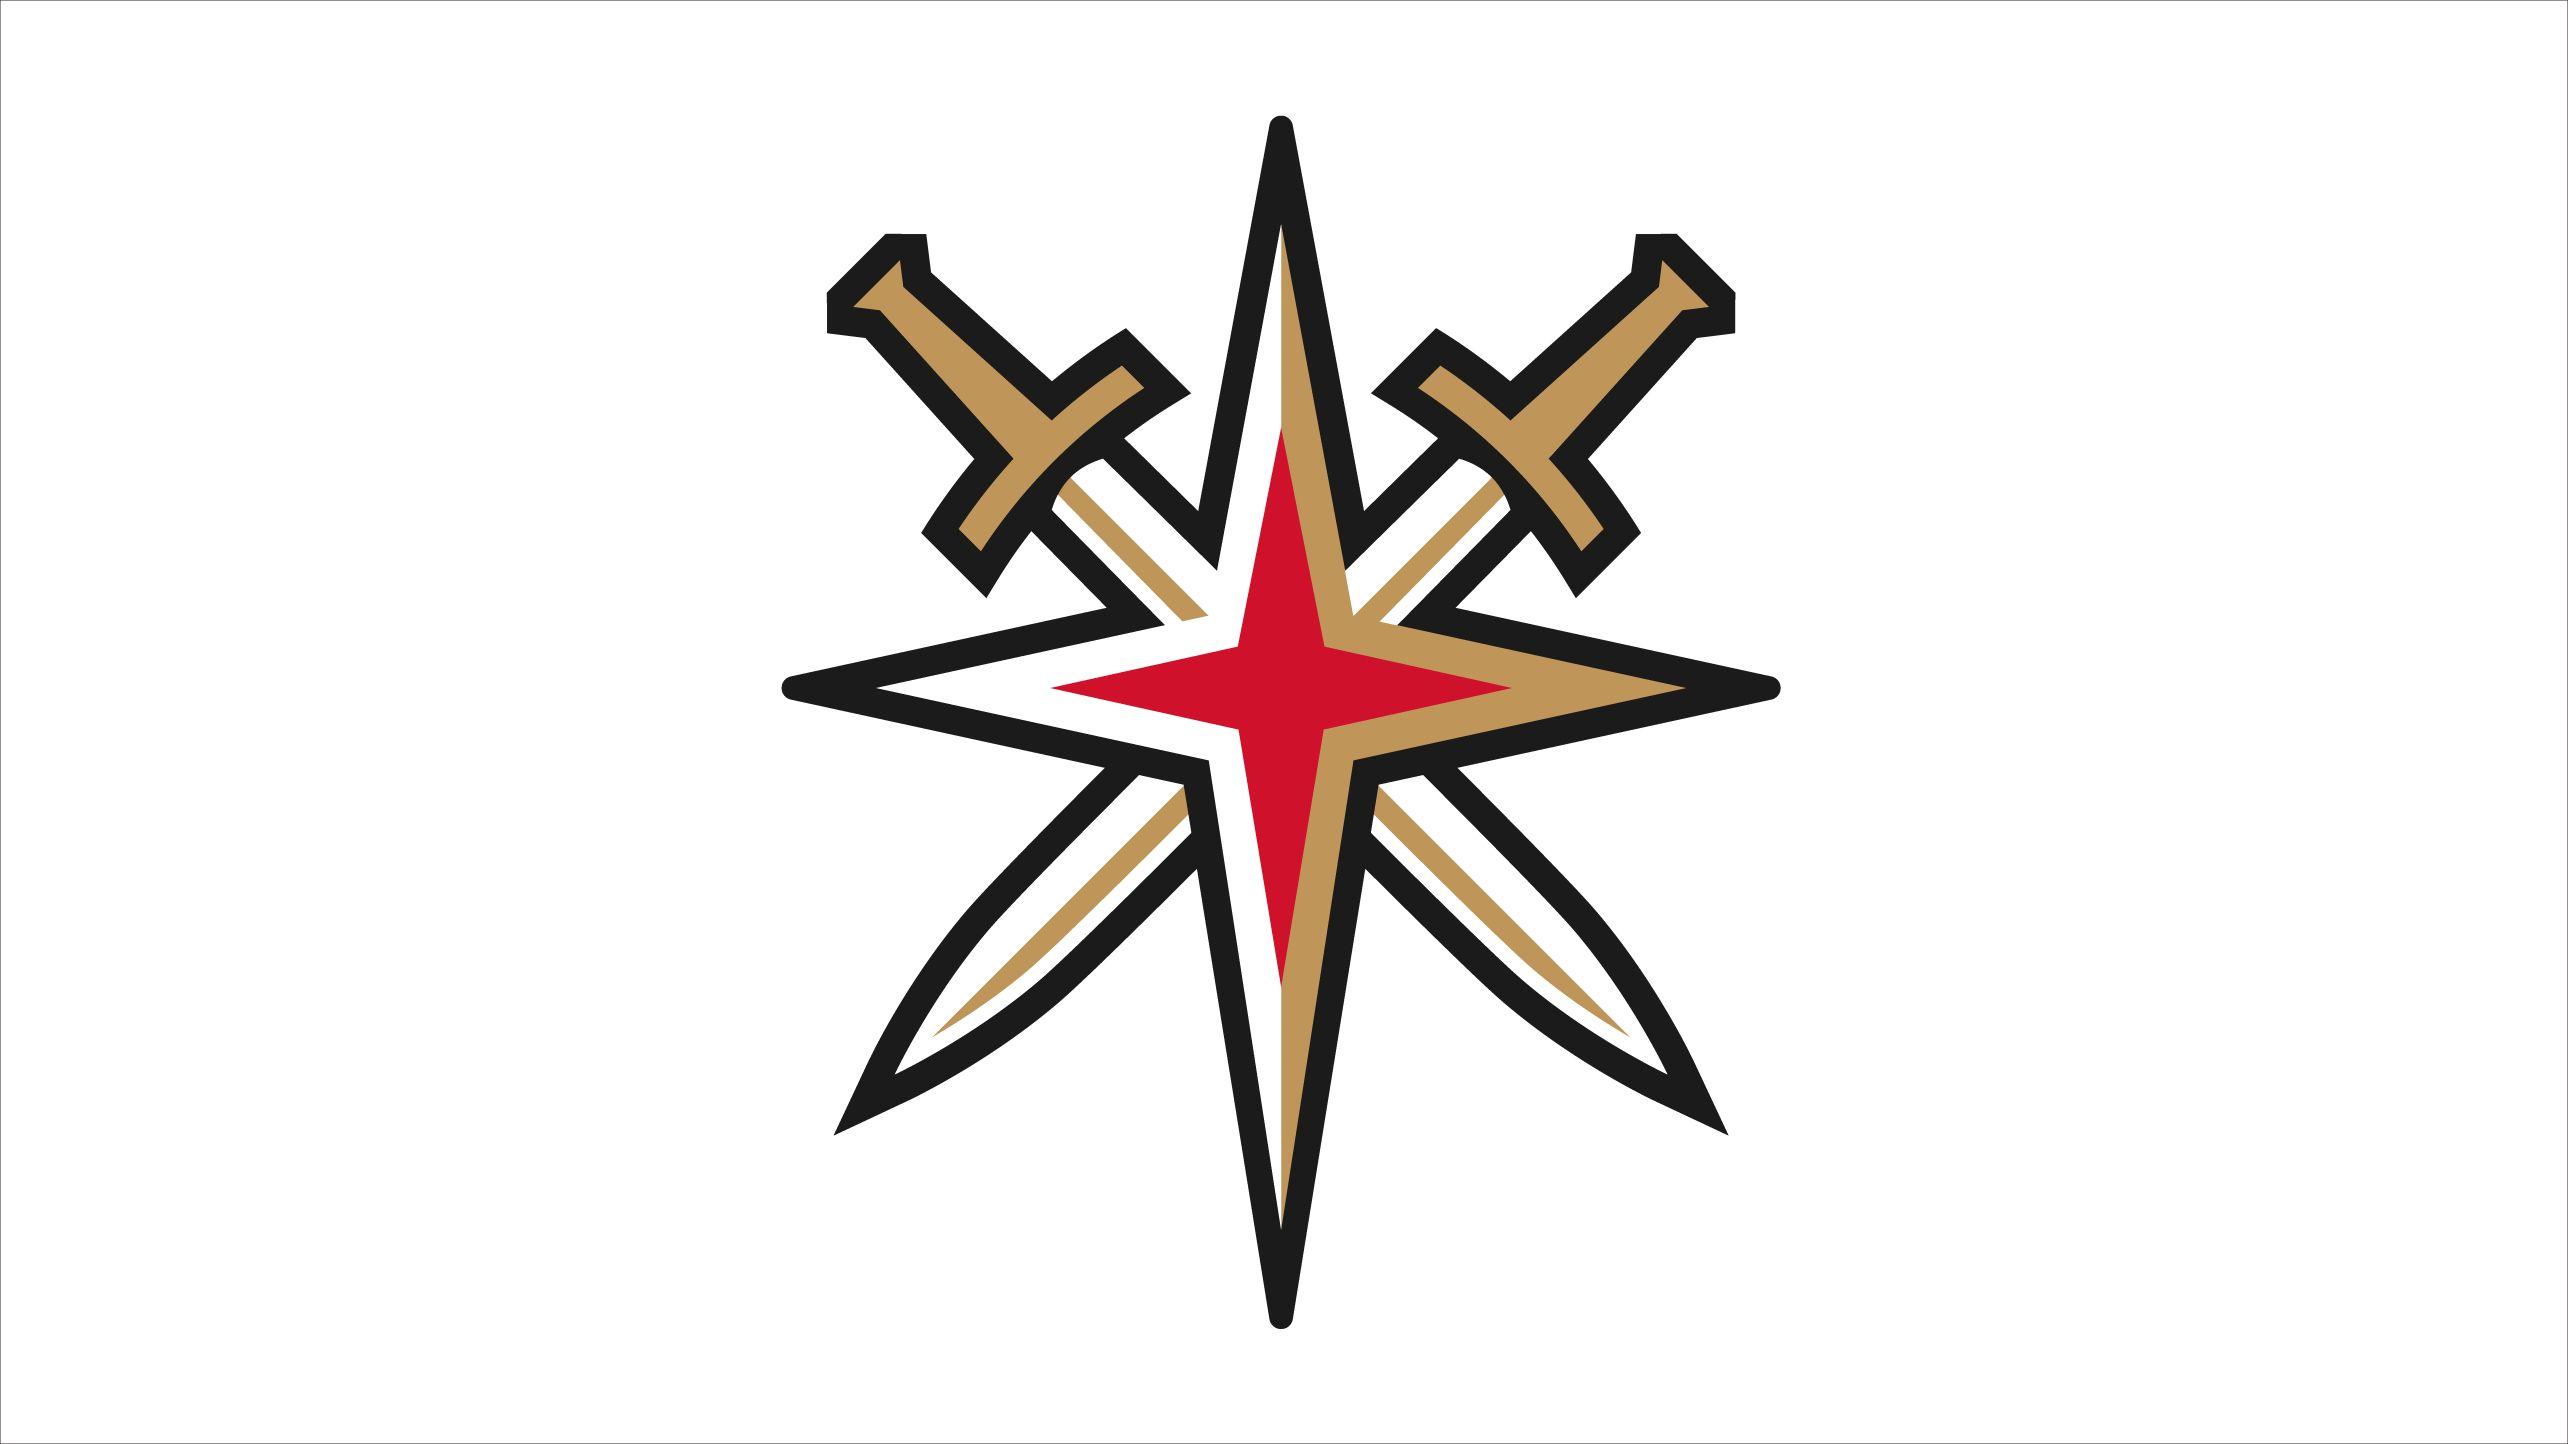 Gold and Black Knights Logo - Logos | Vegas Golden Knights